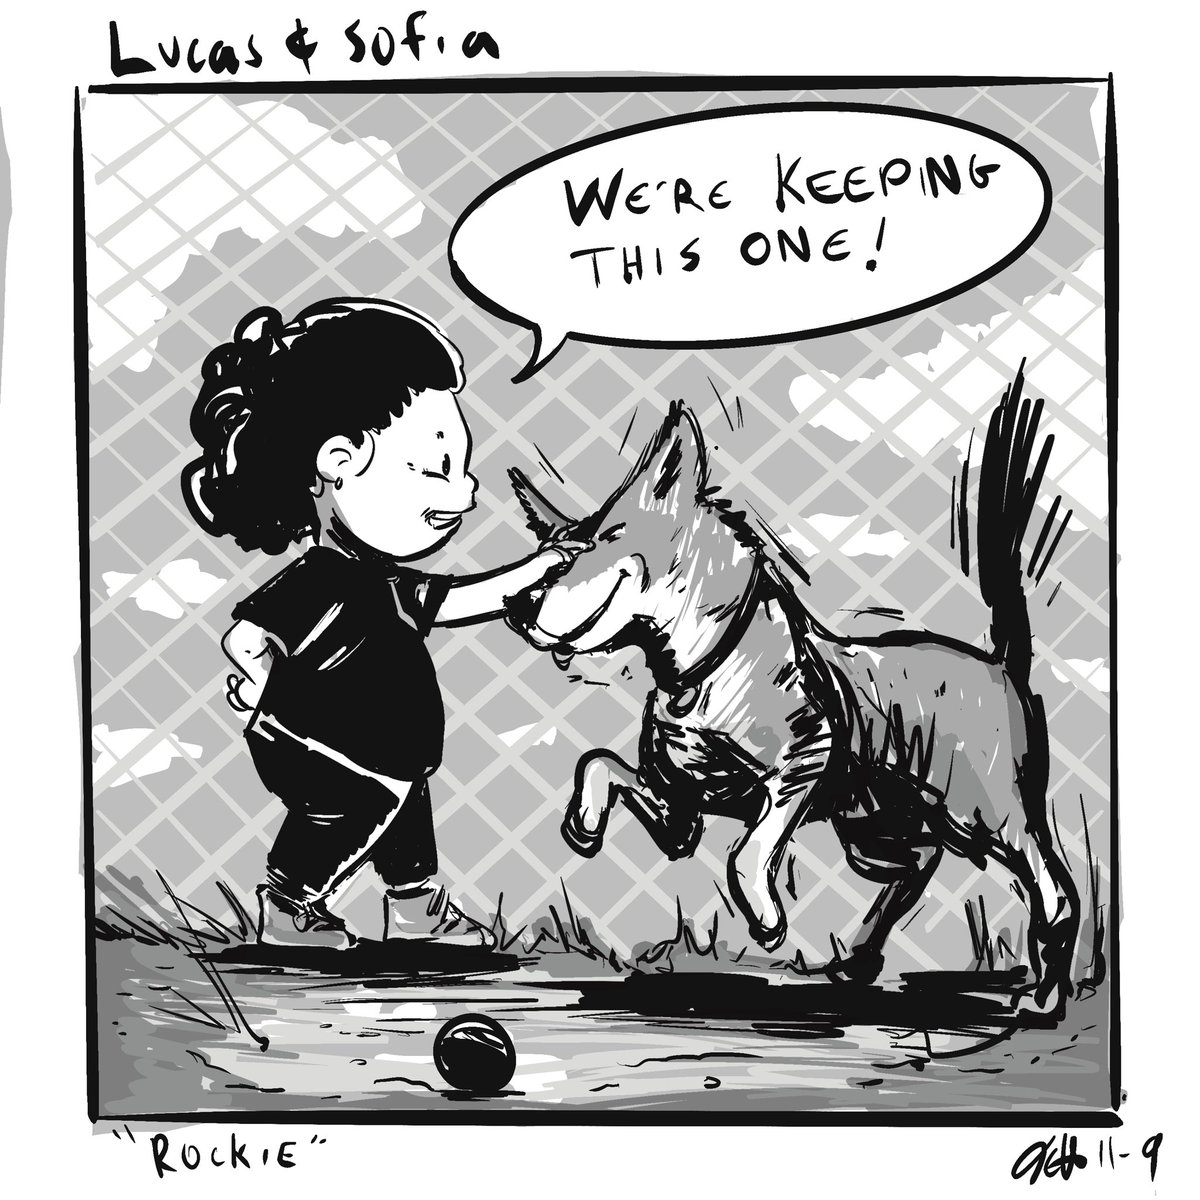 Lucas & Sofia - “Rockie” #comicstrip #comics #comedy #kidscomics #lucasandsofia #comicart #comicstripseries #dog #siberianhusky